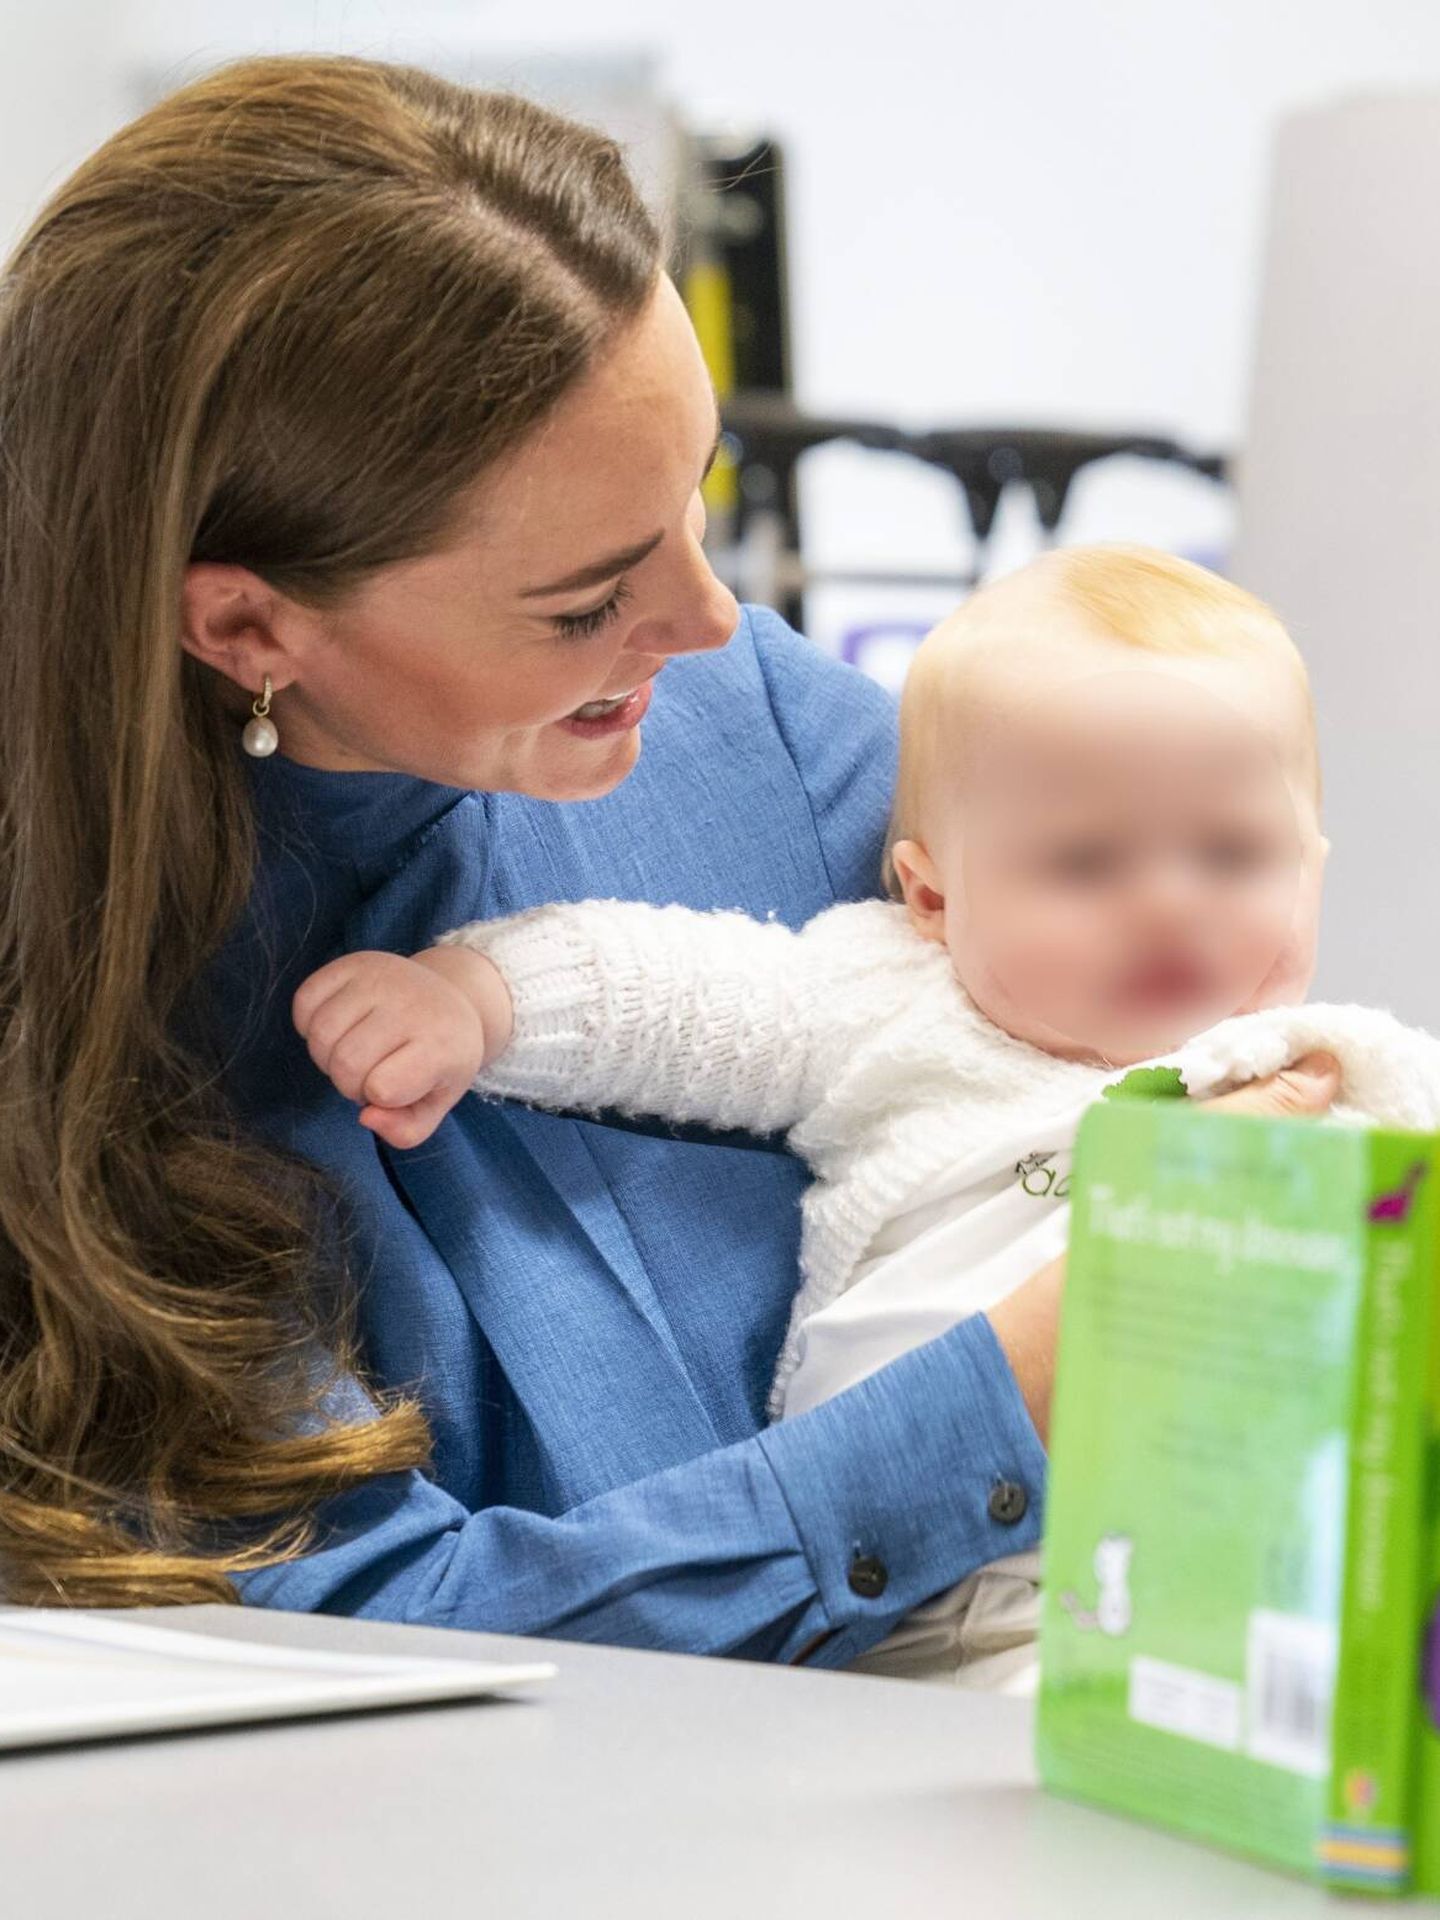 La duquesa de Cambridge 'bromea' sobre tener otro hijo después de coger en brazos a un bebé. (Cordon Press)